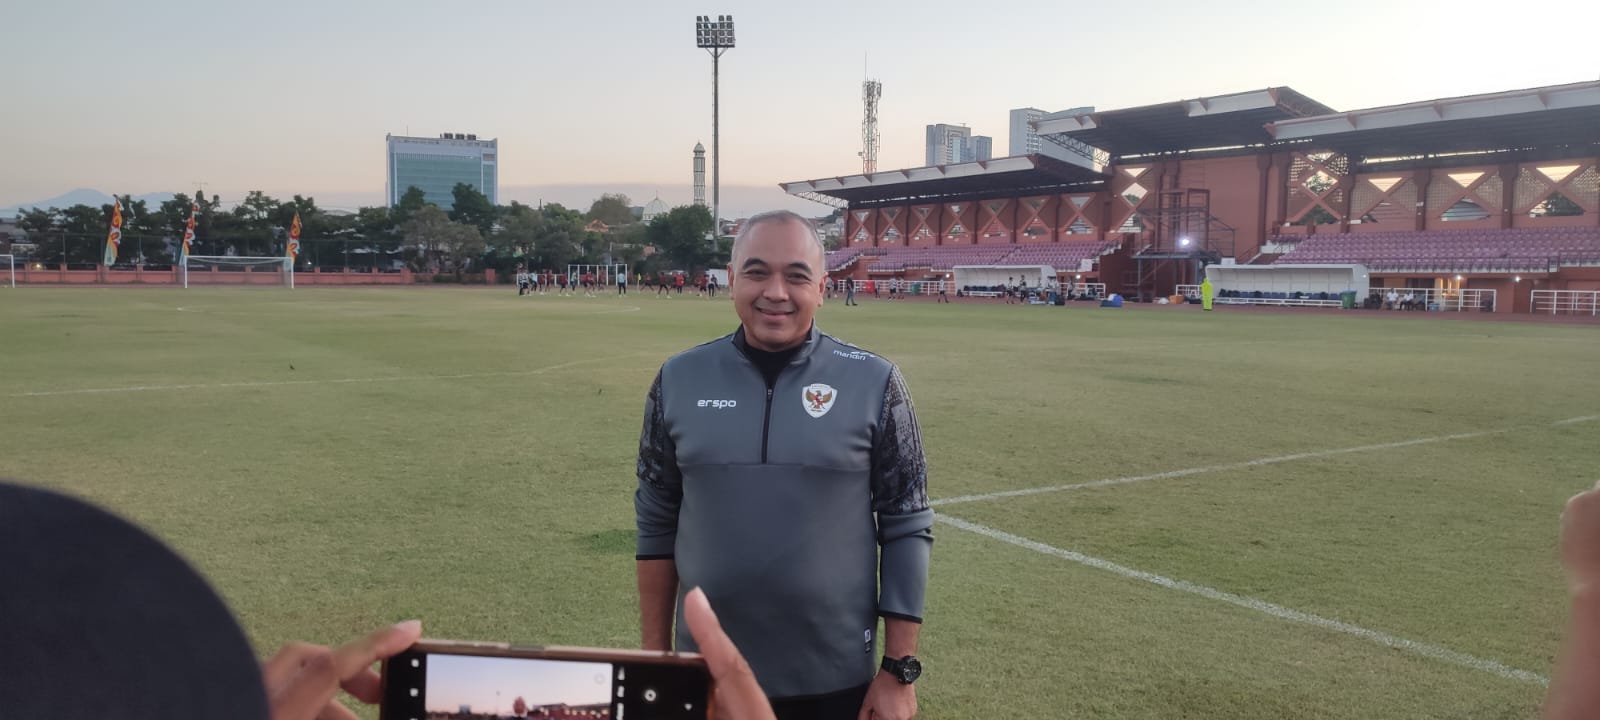 Manajer Timnas U-19 Ungkap Alasan Piala AFF Digelar di Surabaya